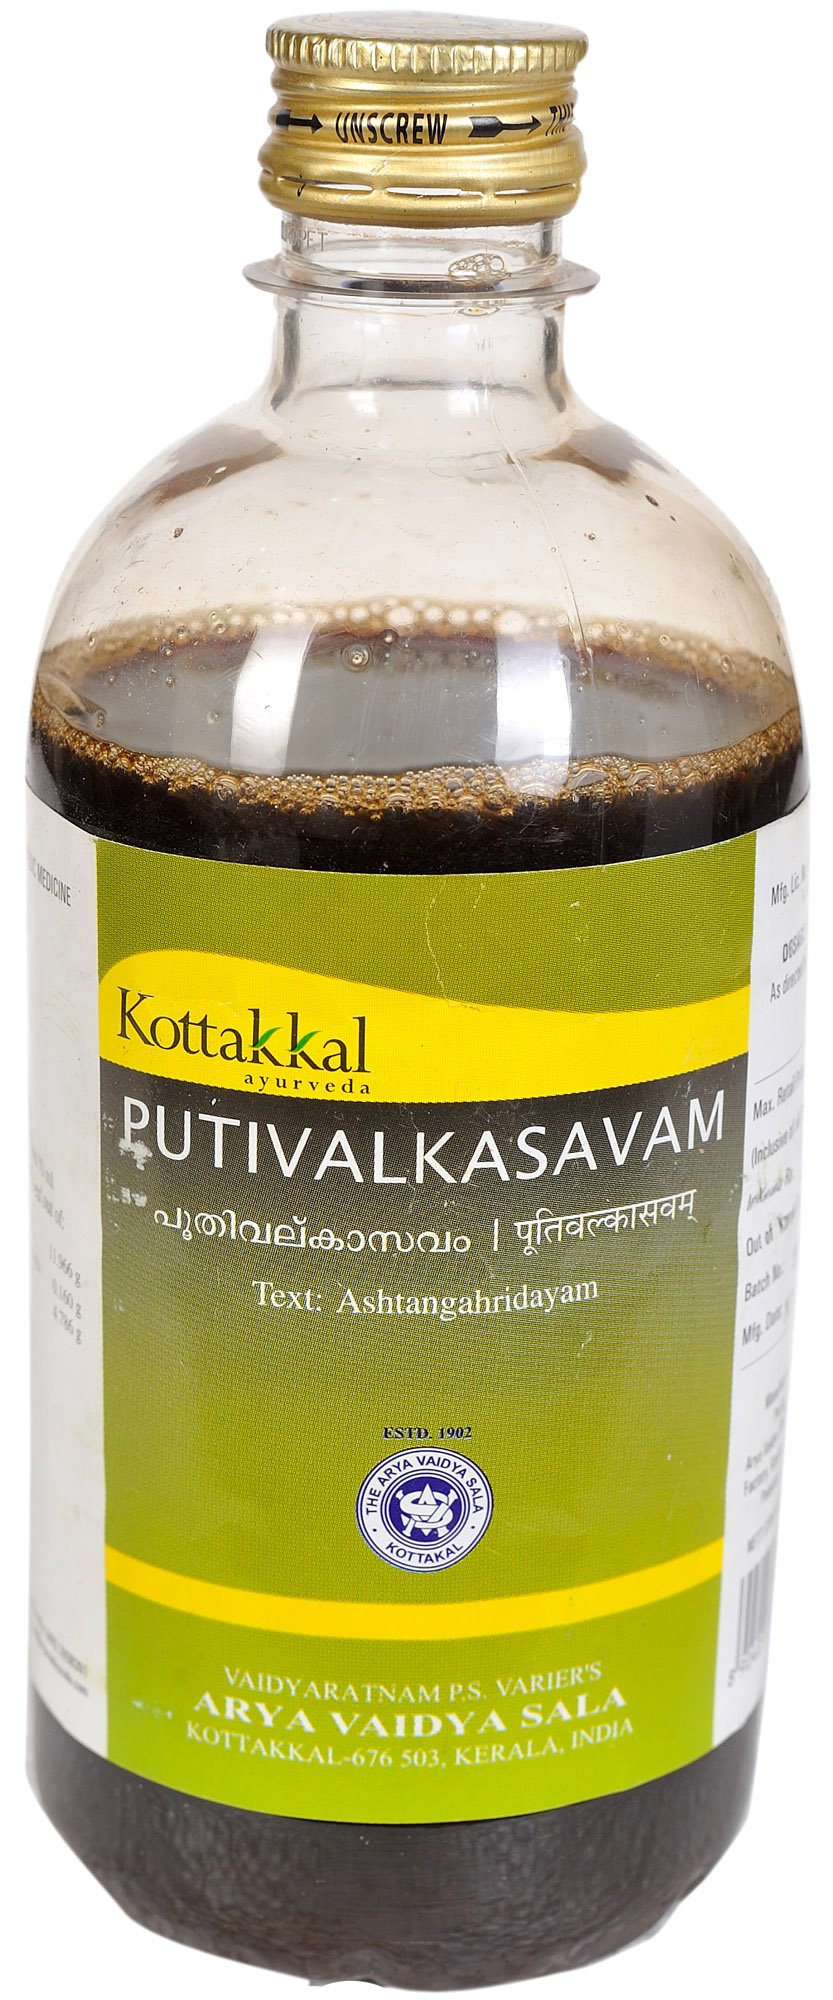 Putivalkasavam - book cover